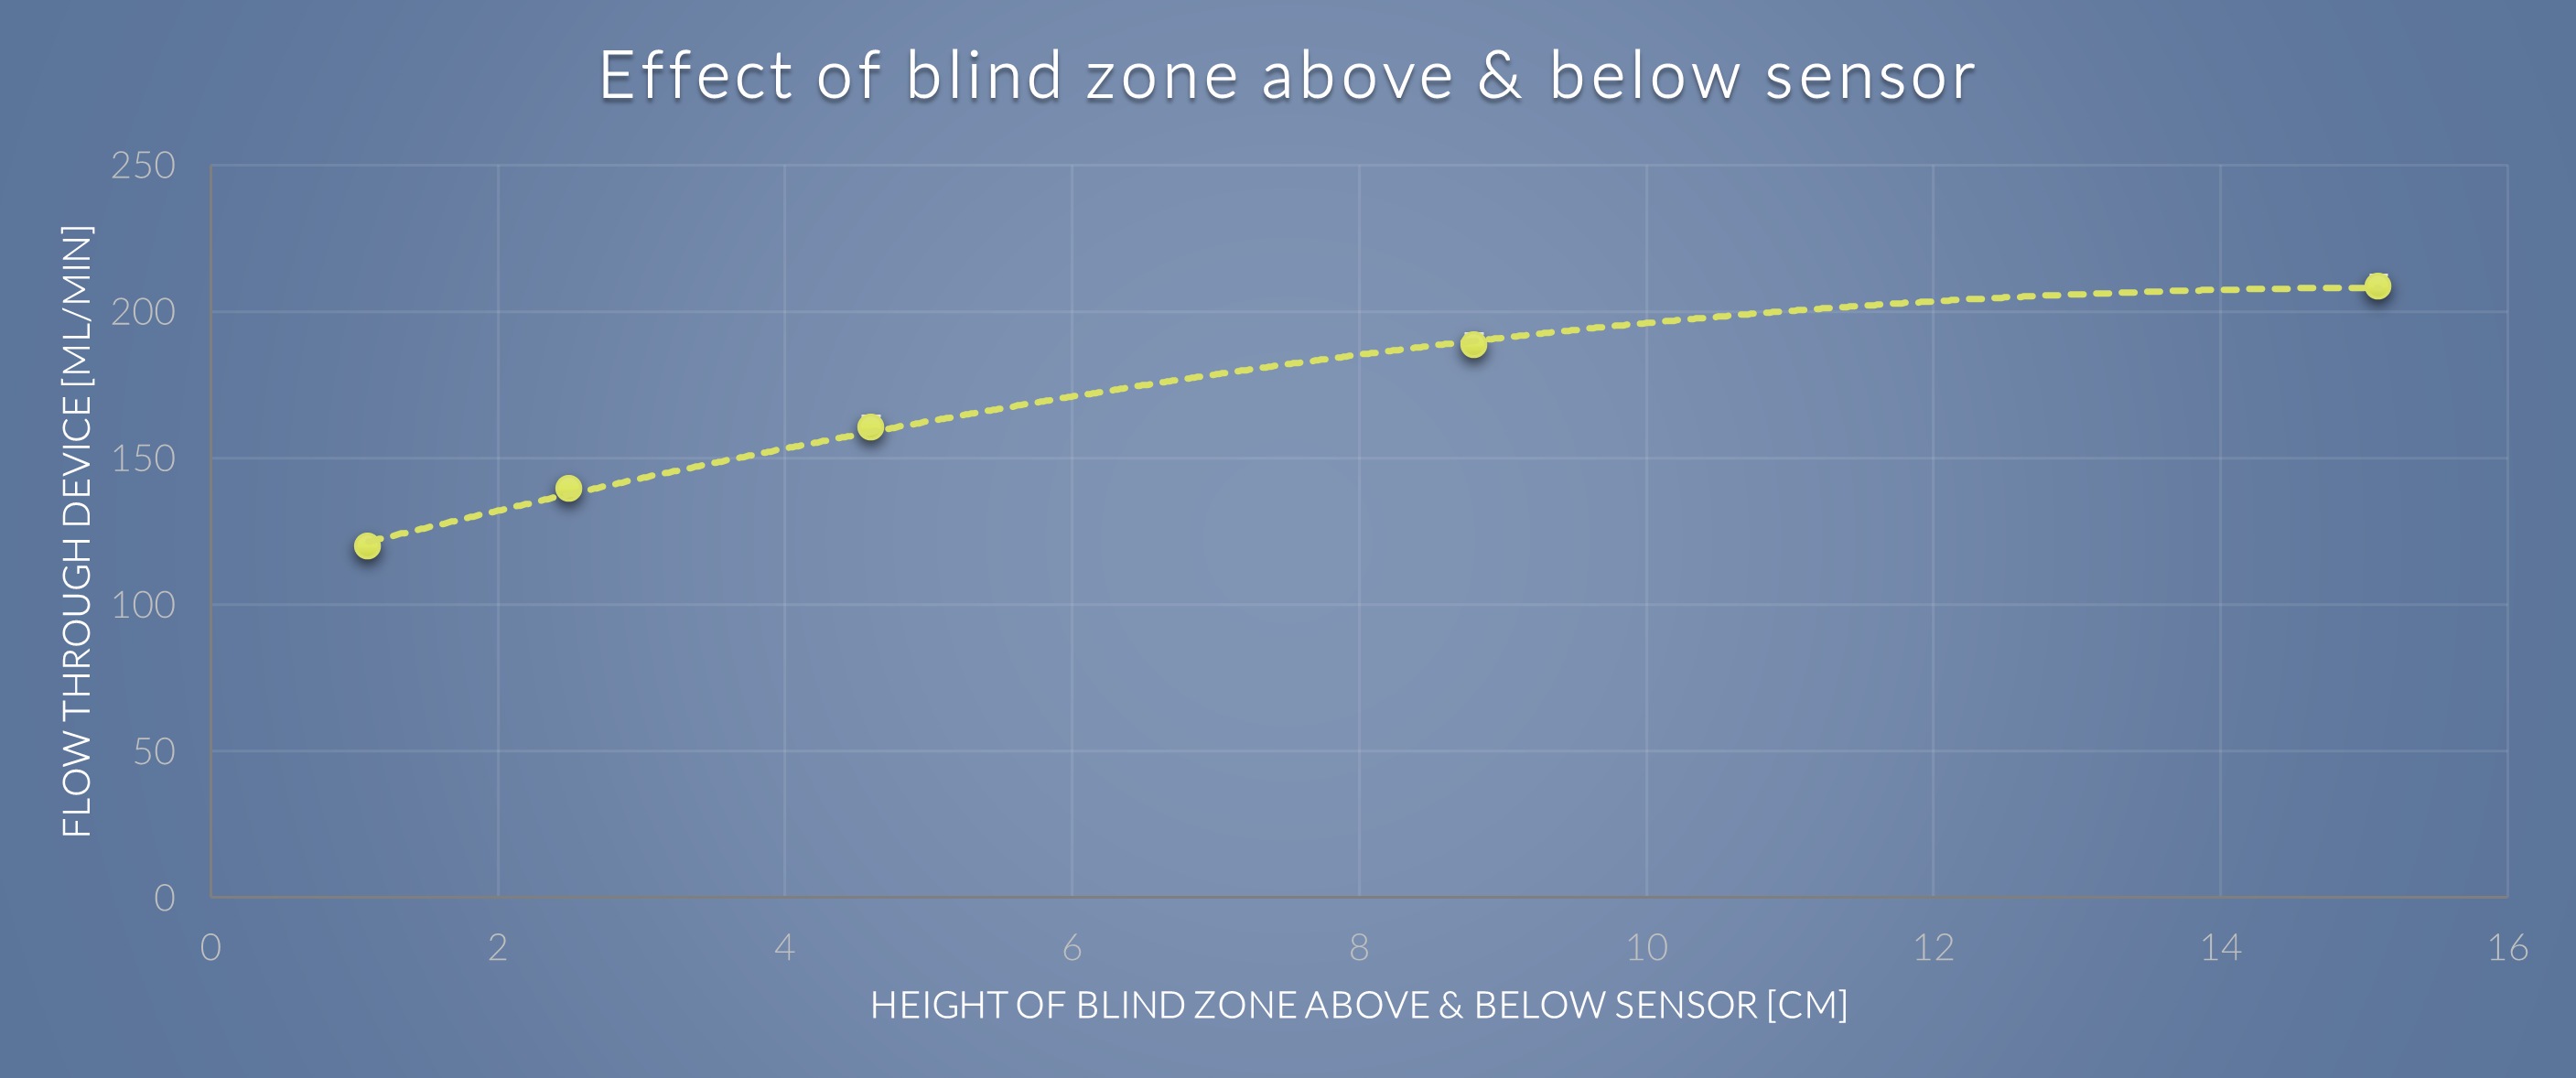 Effect of blind zone above and below iFLUX sensor